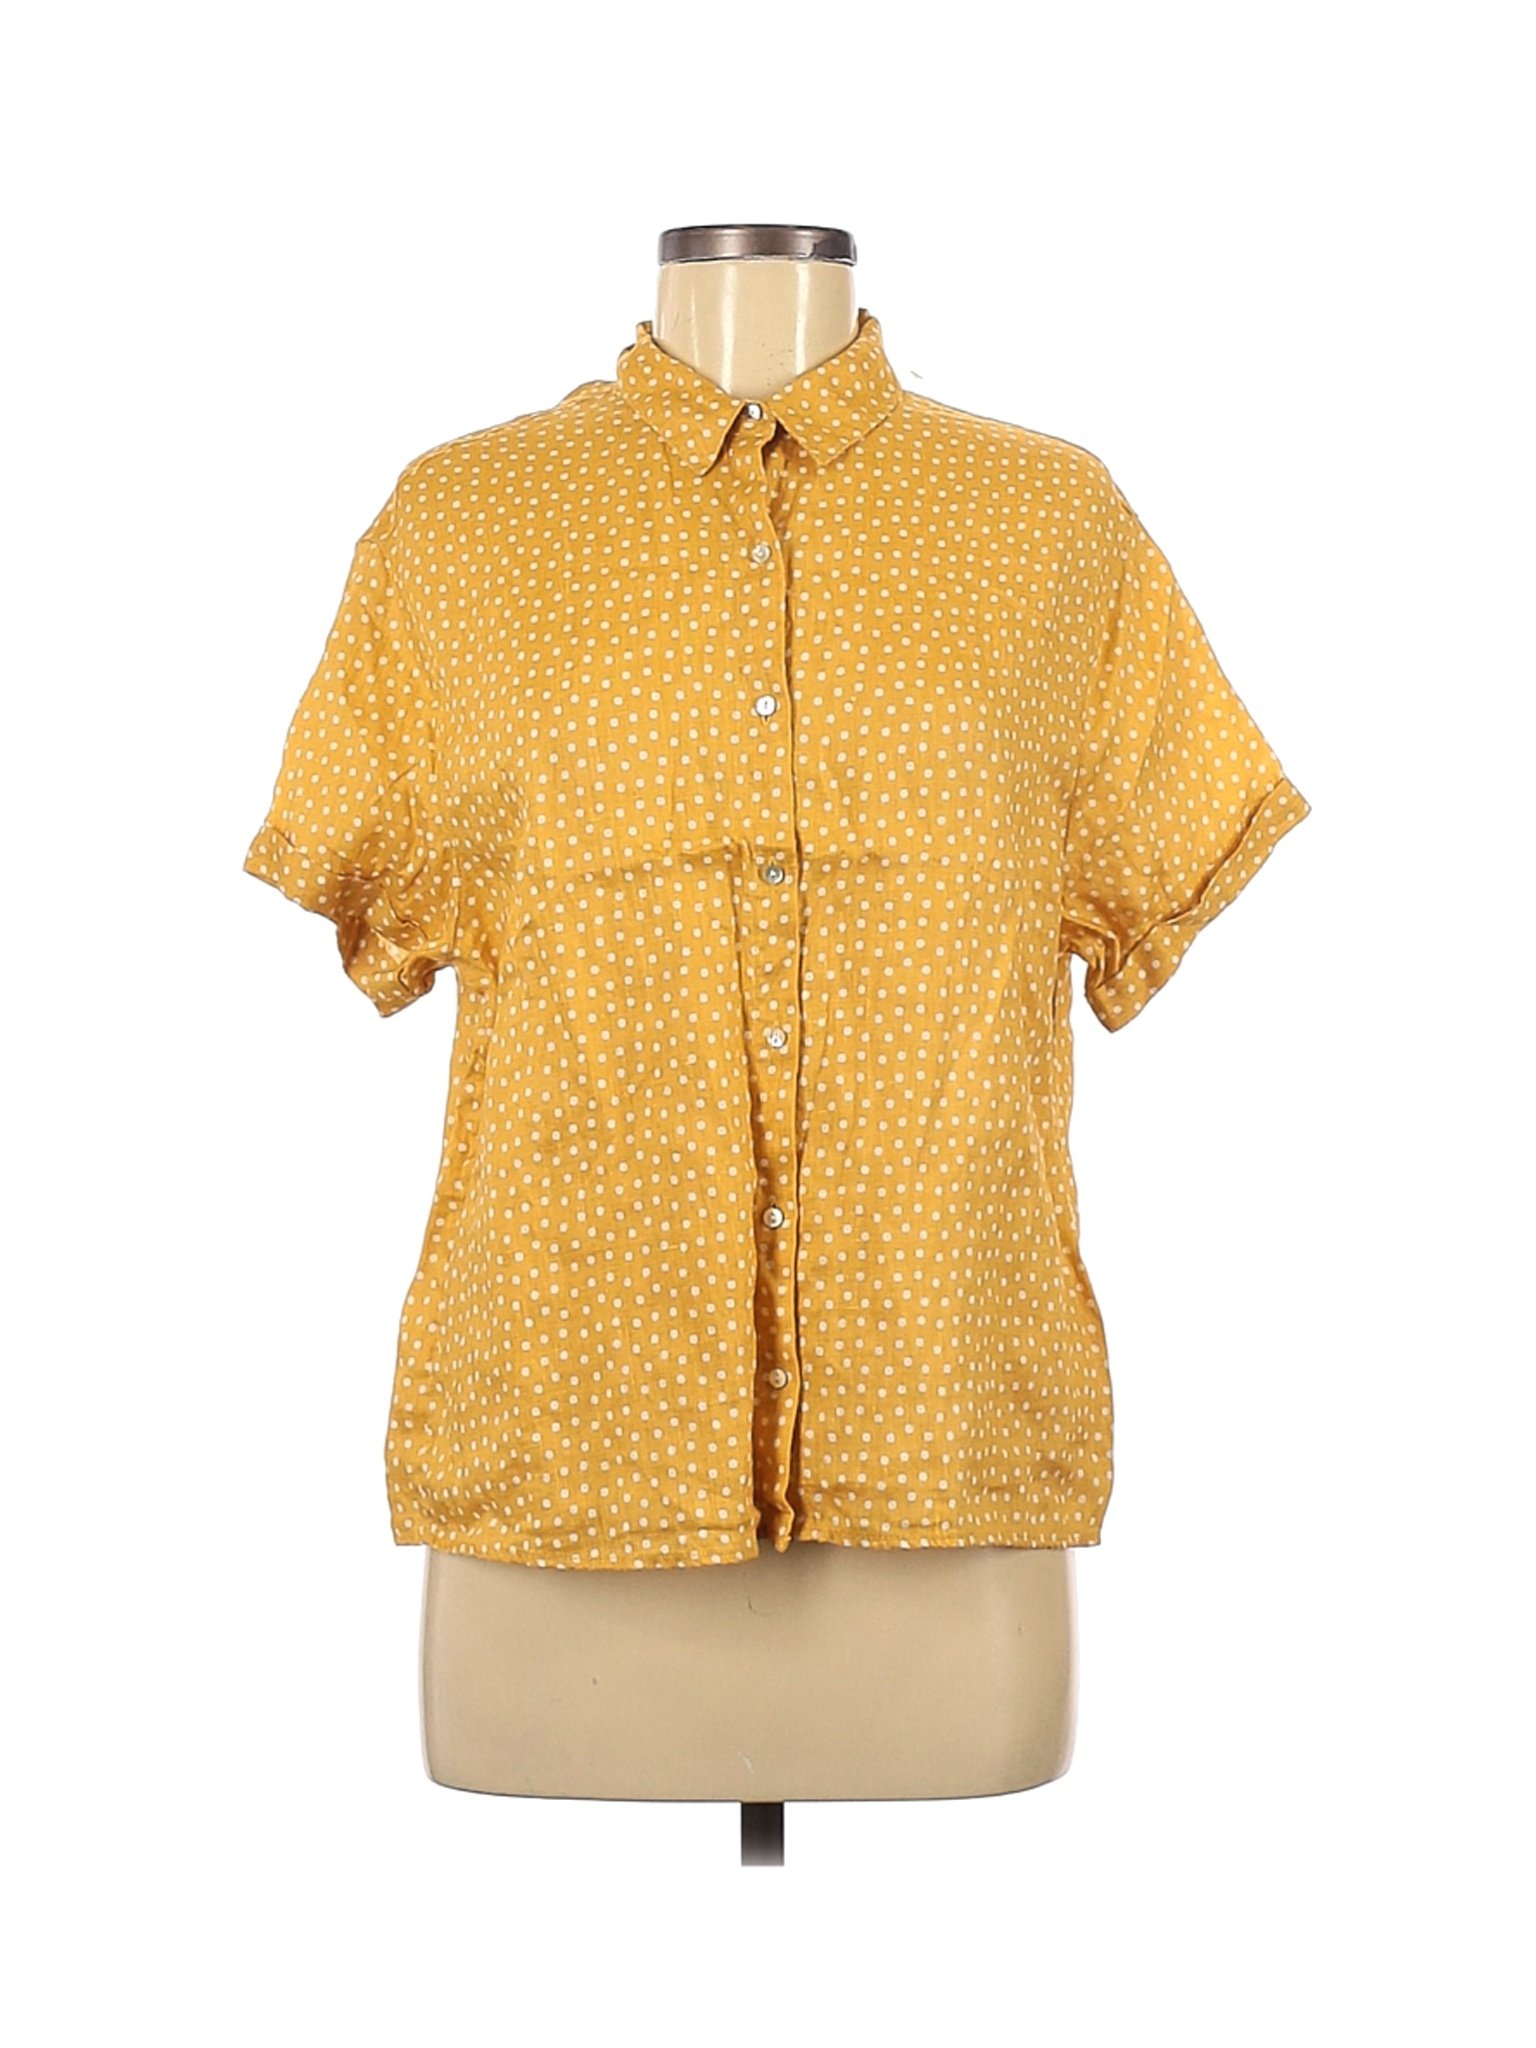 Rachel Zoe Women Yellow Short Sleeve Button-Down Shirt M | eBay